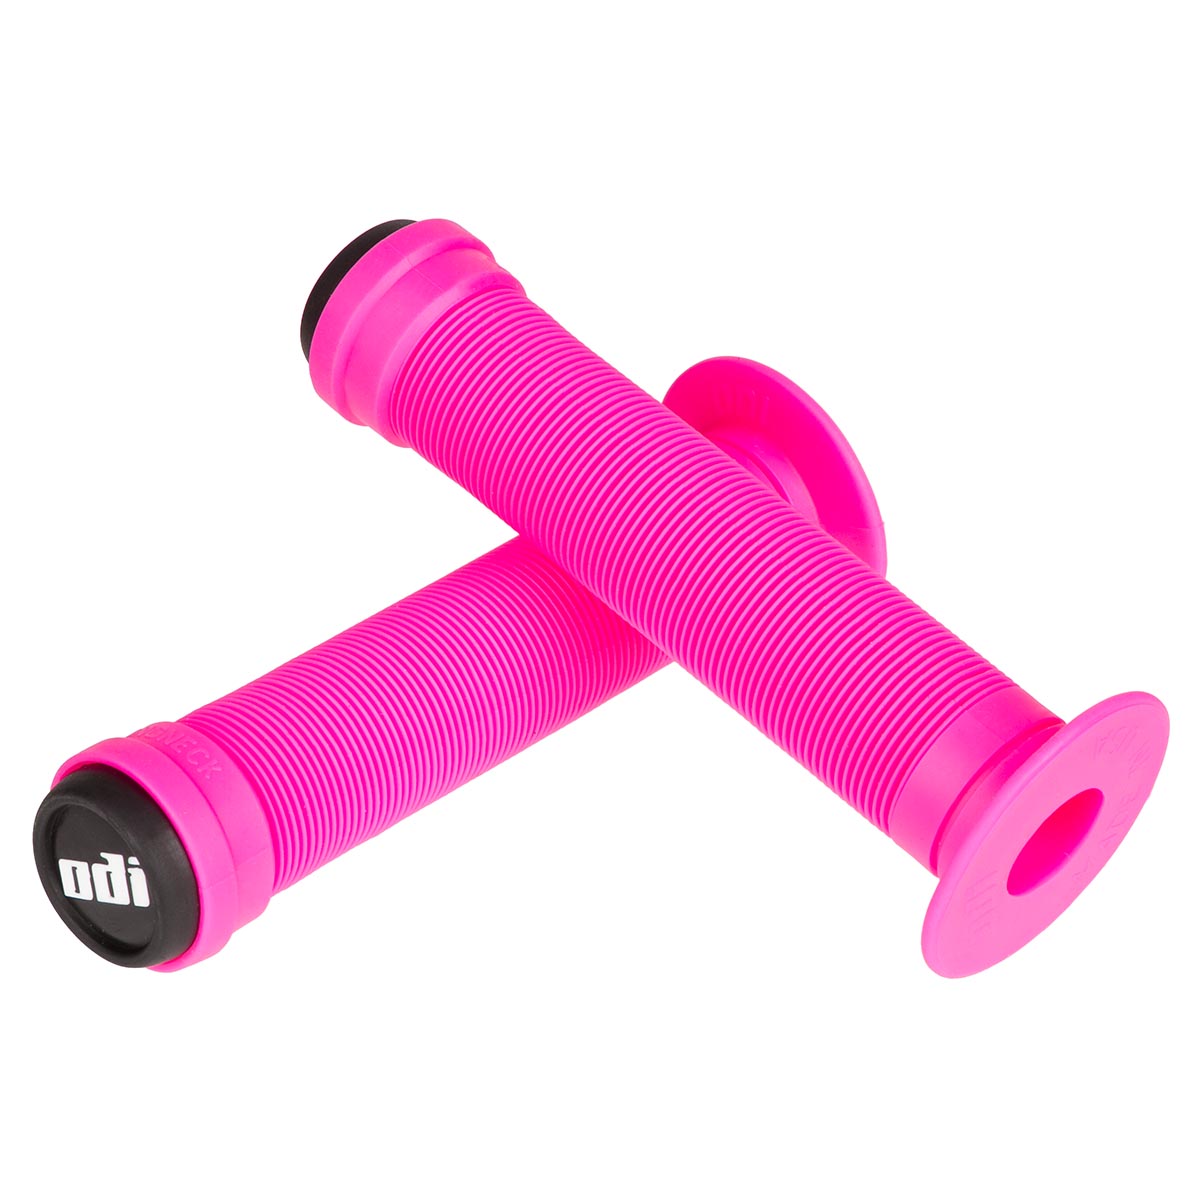 ODI MTB Grips Longneck ST Neon Pink, 143 mm